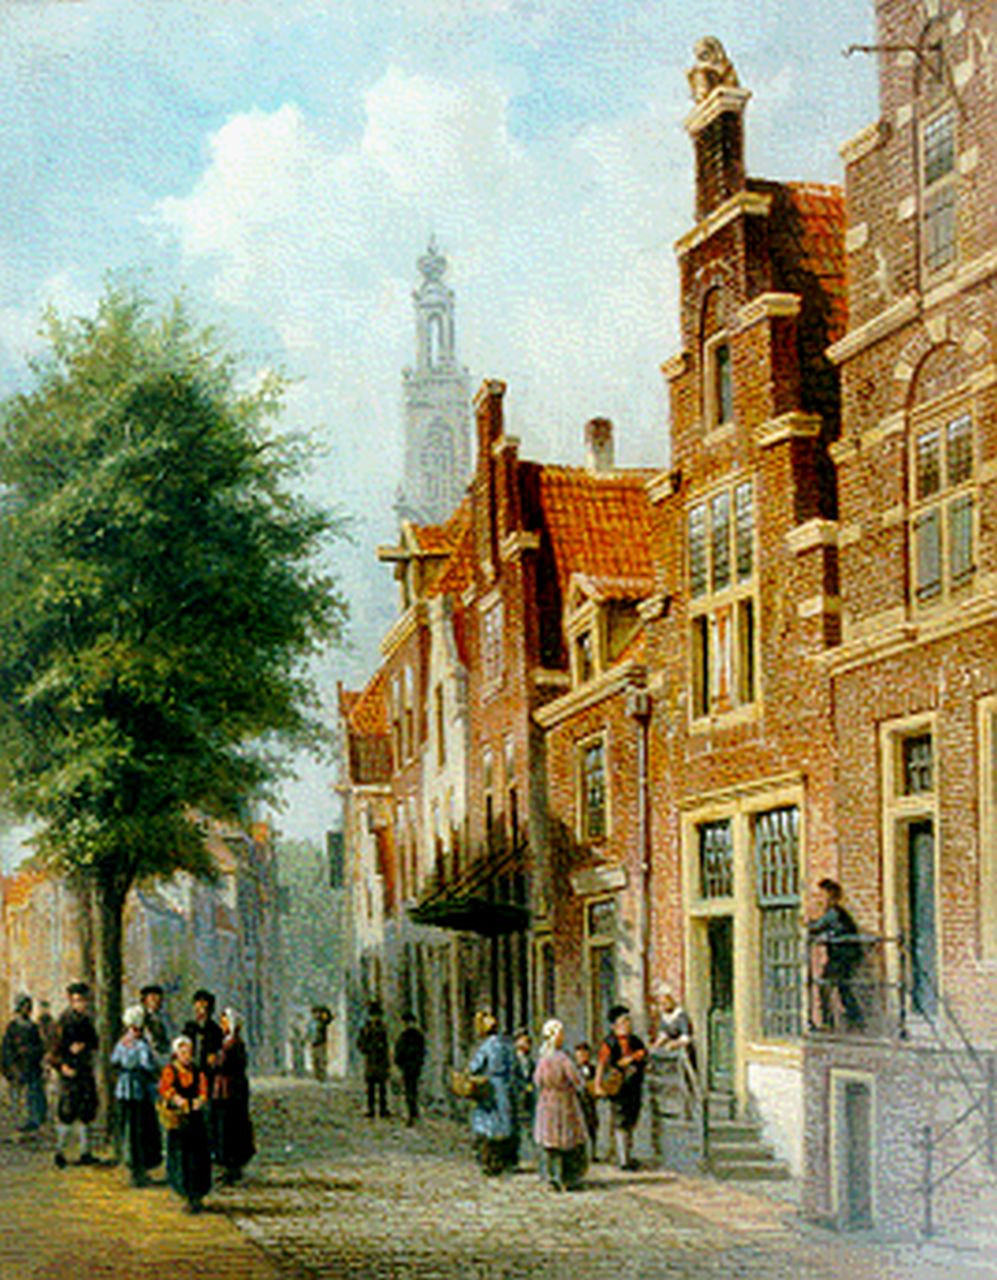 Henry Bosch | Figures in a sunlit street, Amersfoort, oil on panel, 30.0 x 23.3 cm, signed l.r.